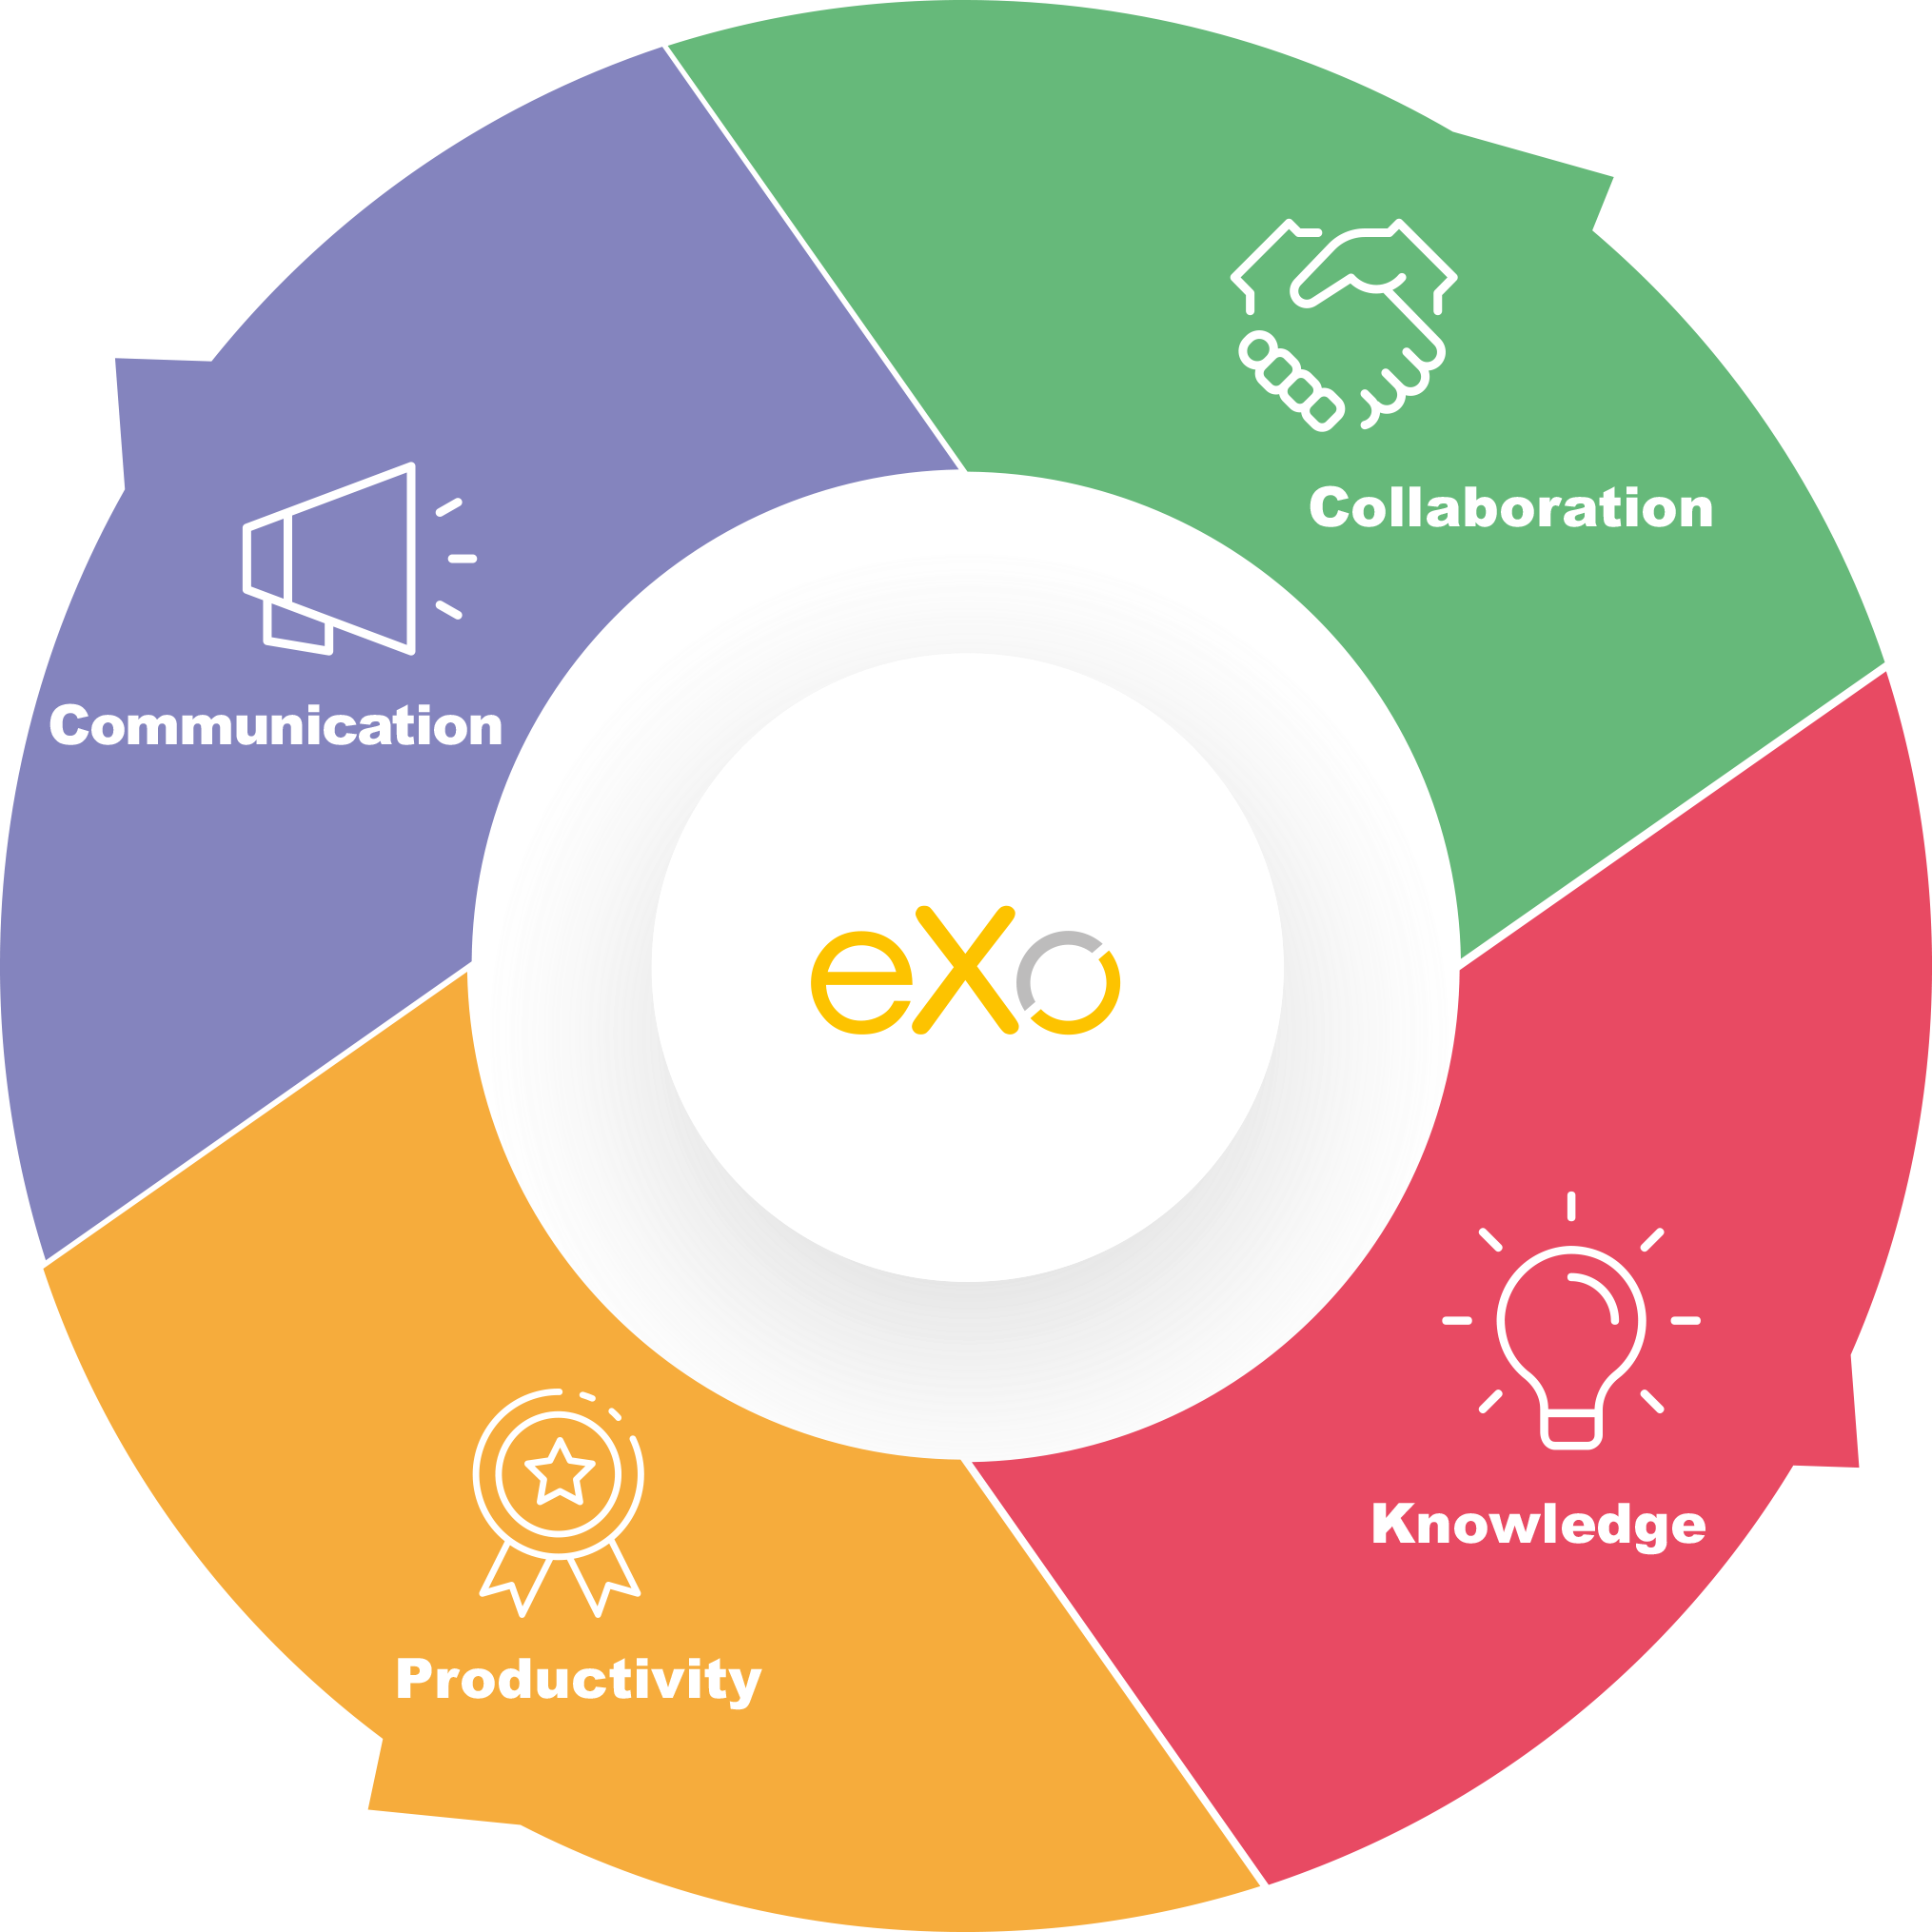 About eXo platform